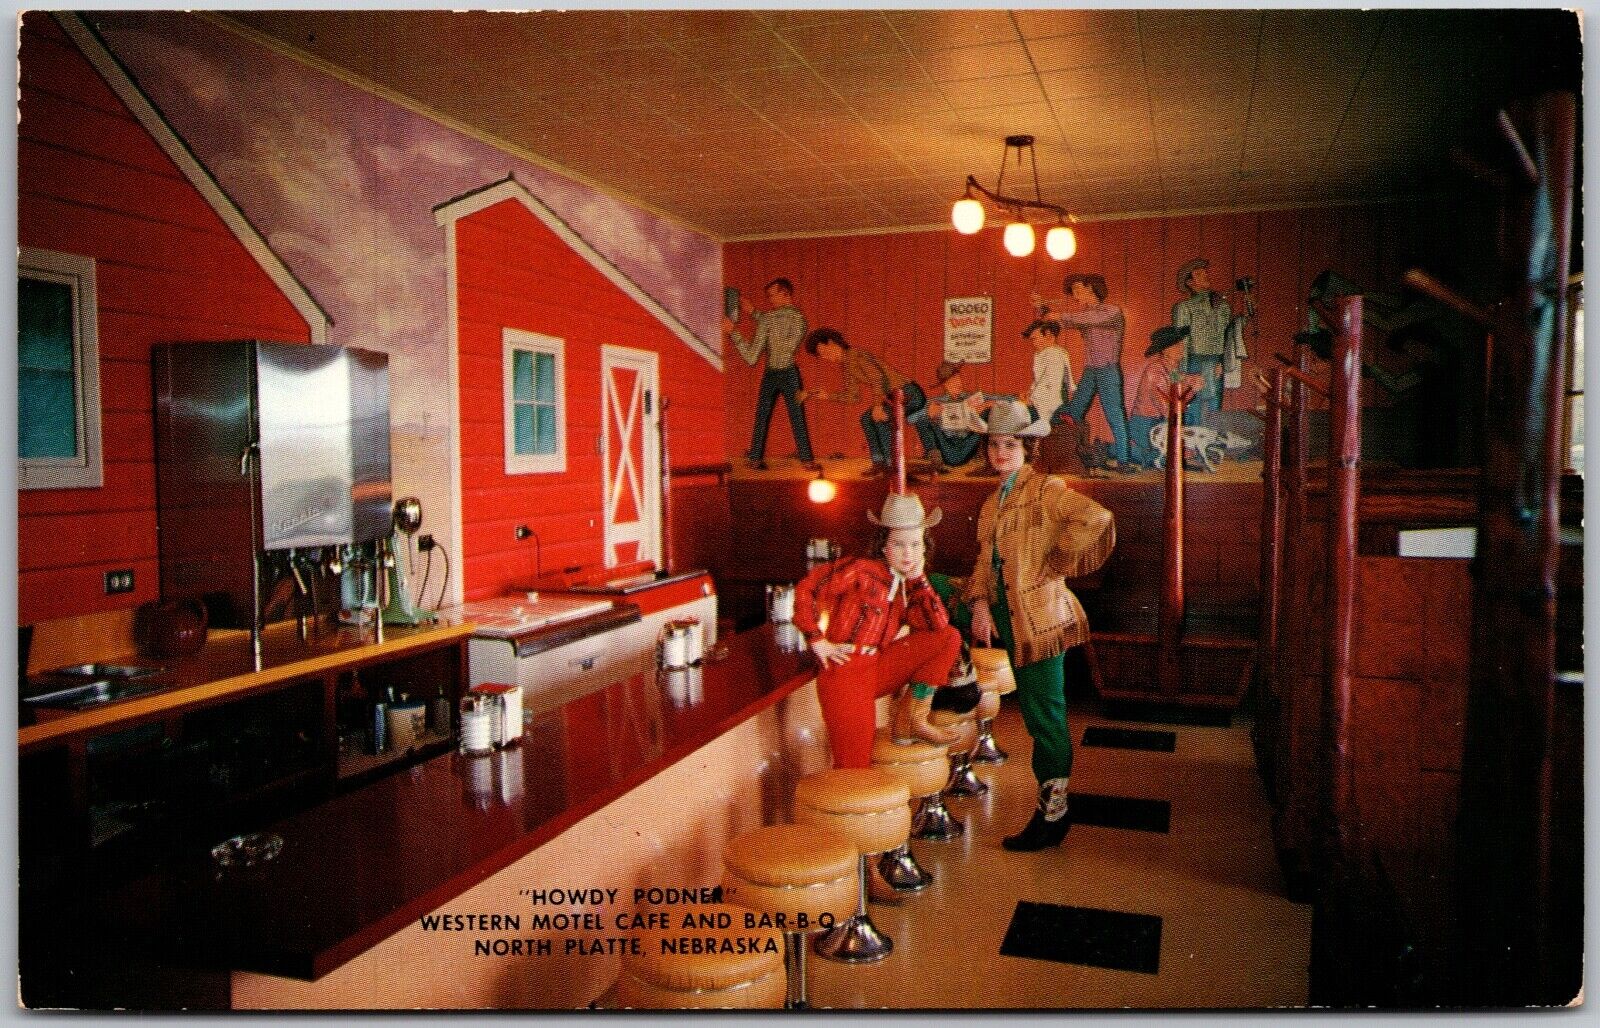 Postcard Vintage Chrome Western Motel Cafe and Bar-B-Q North Platte Nebraska NE